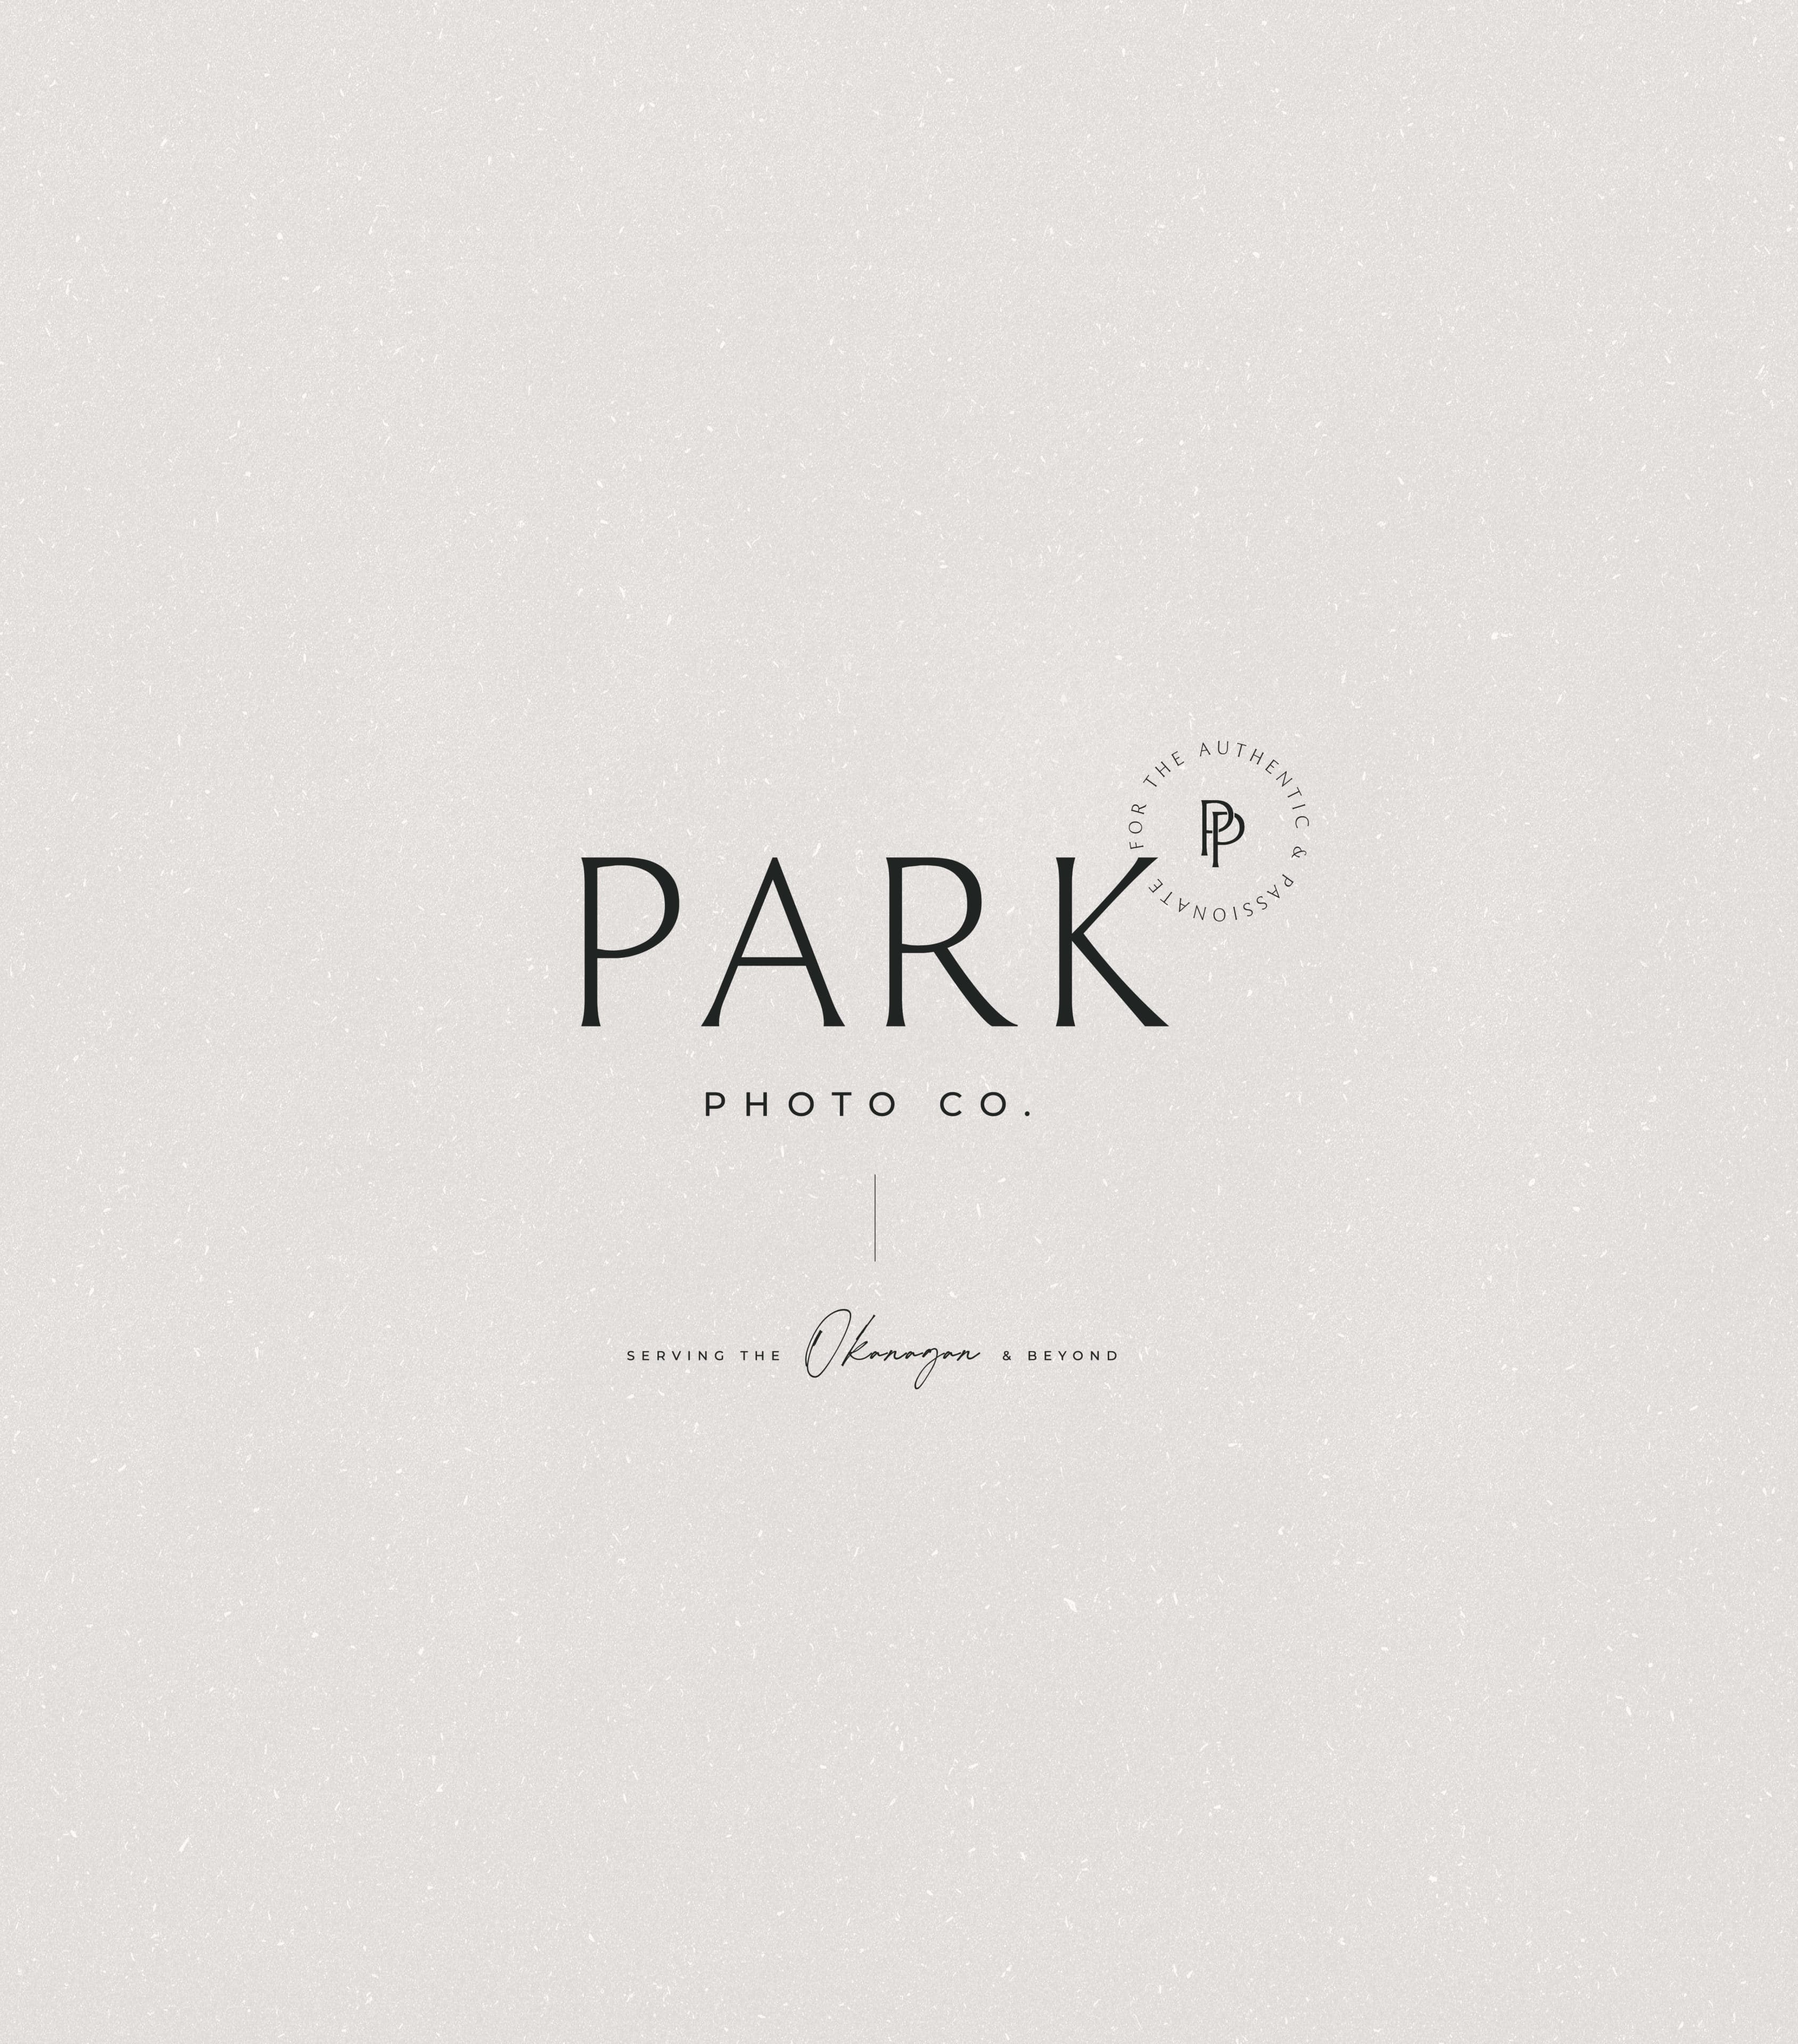 Park Photo Co primary logo mockup with brandmark